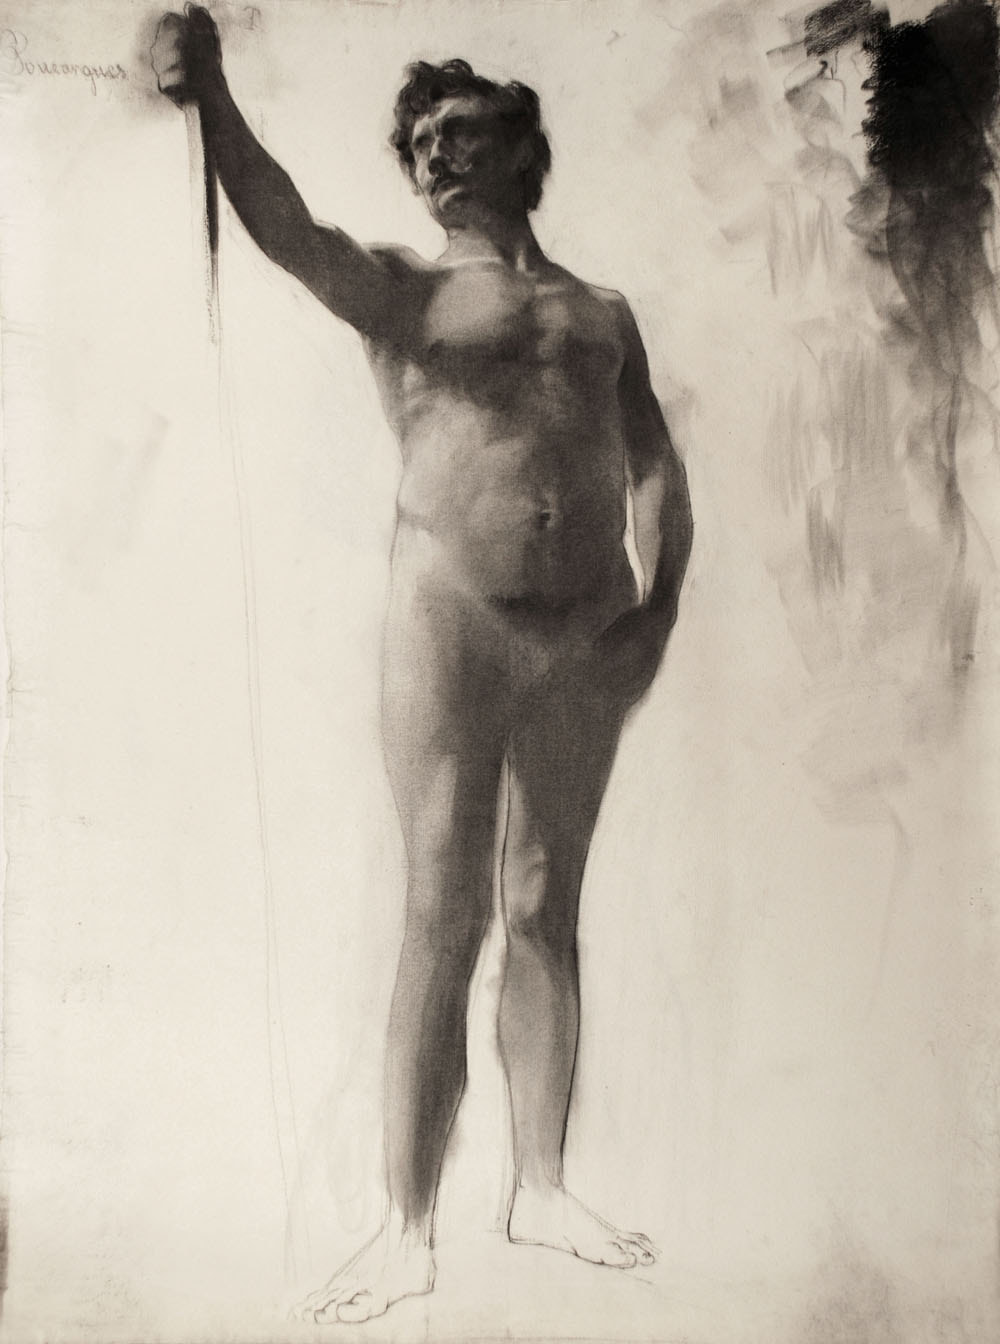 Lucien-Paul Pouzargues drawing standing male nude figure